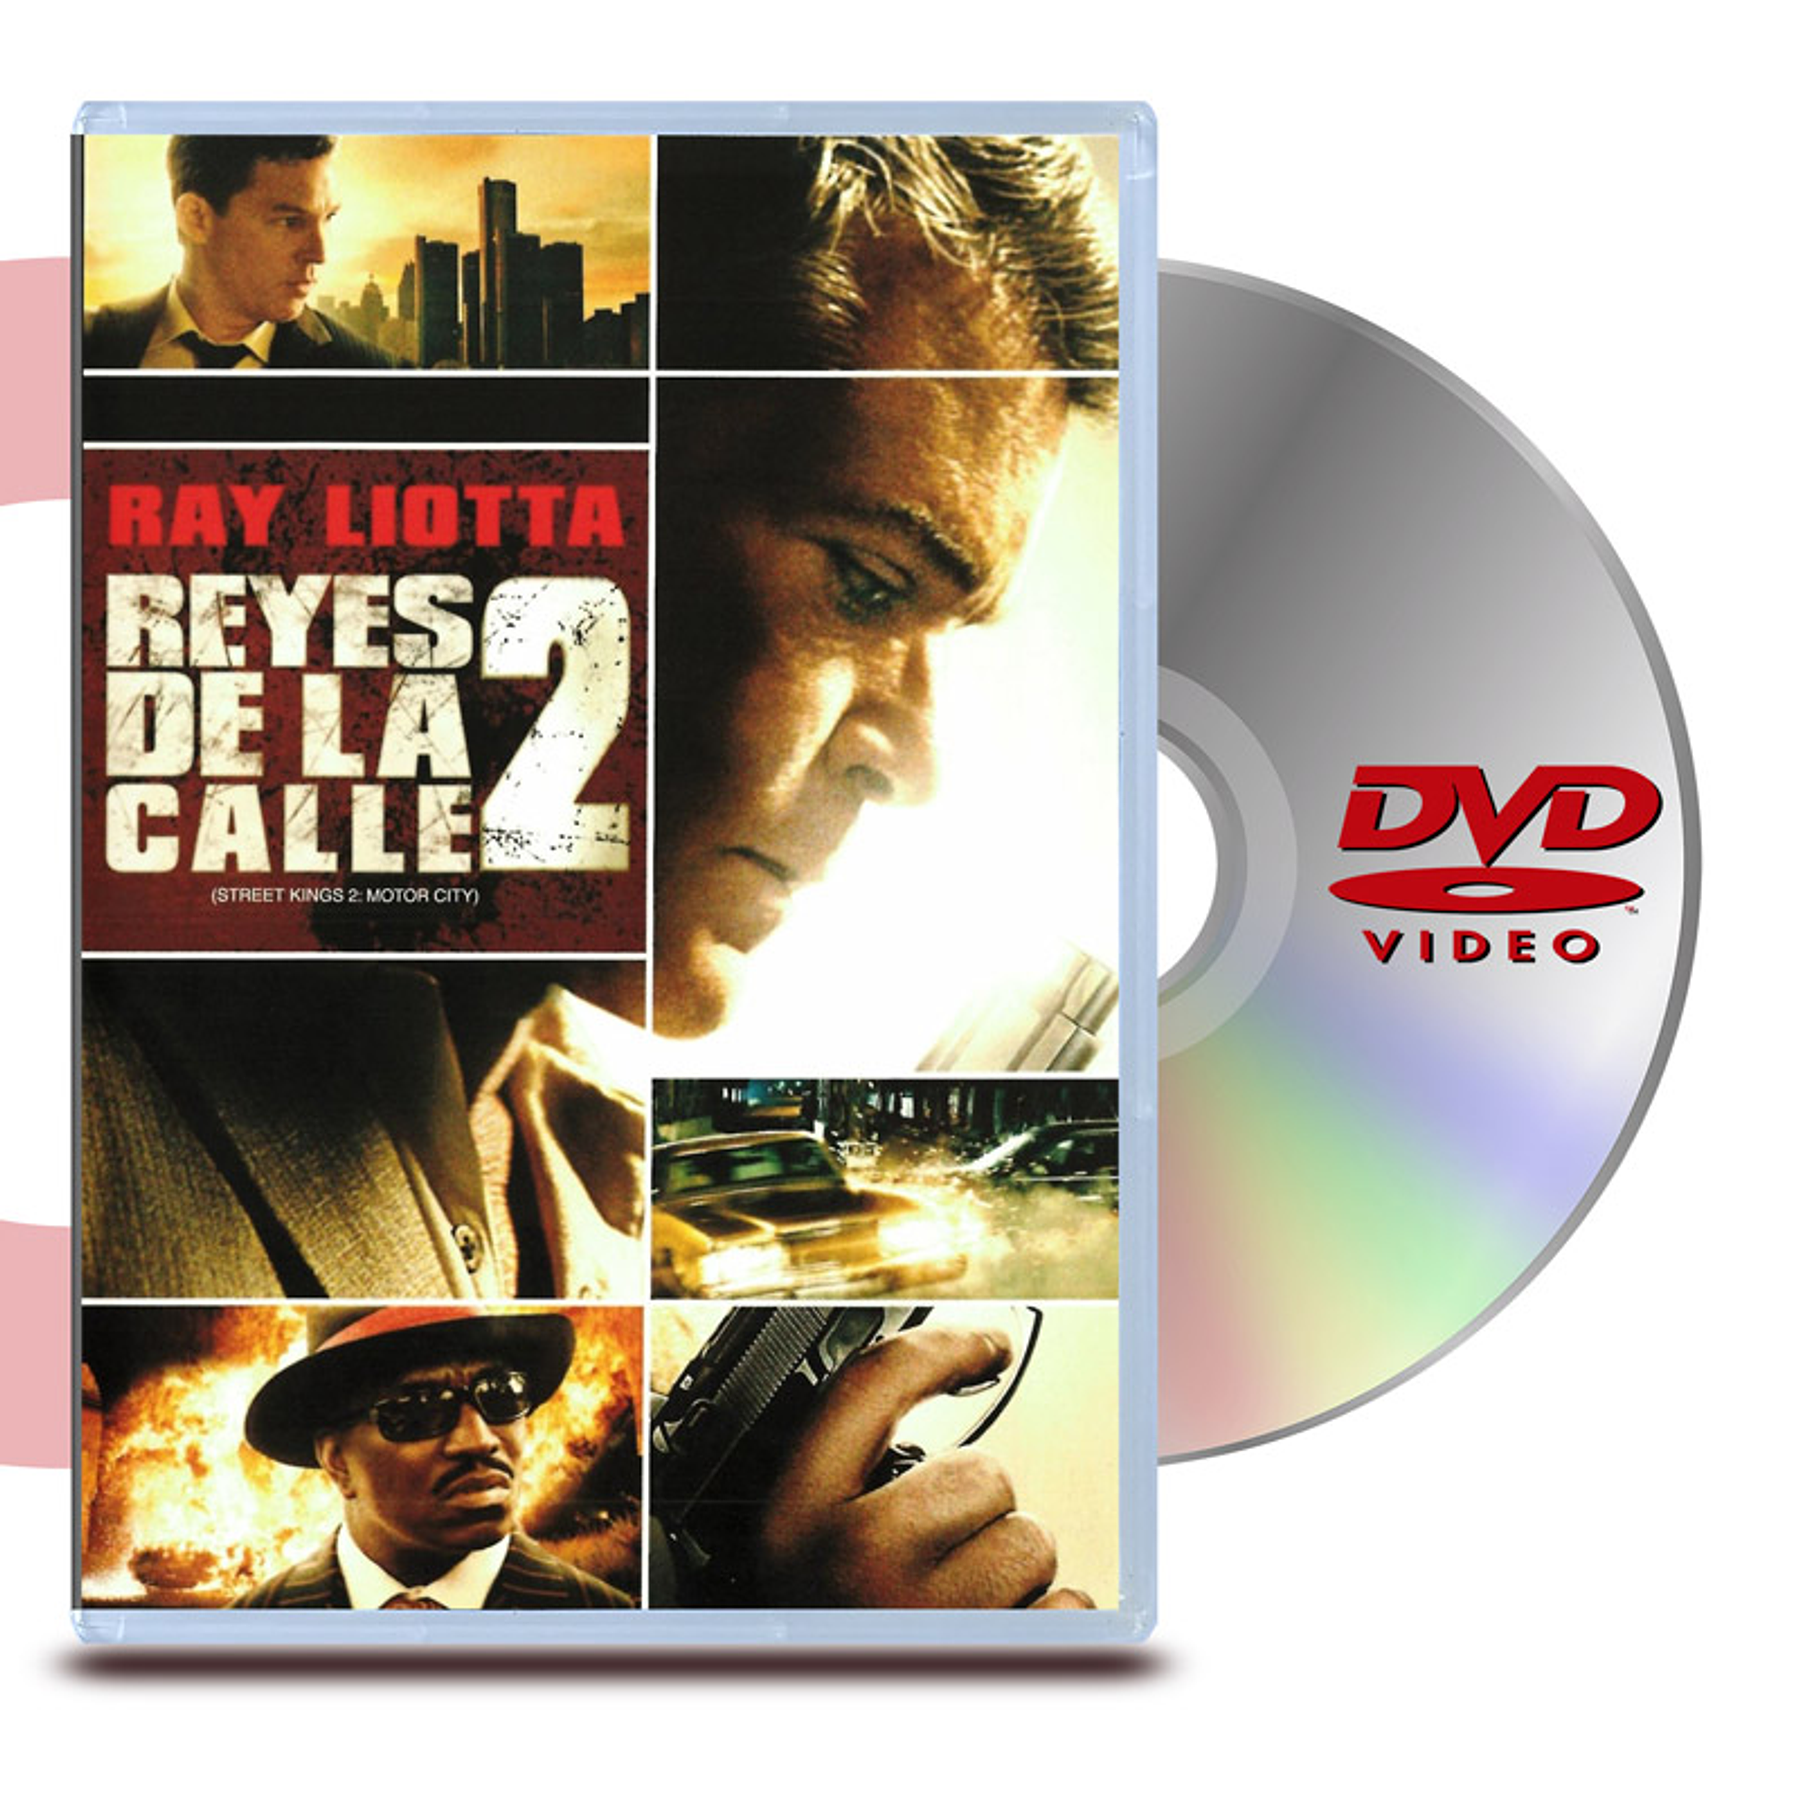 DVD REYES DE LA CALLE 2